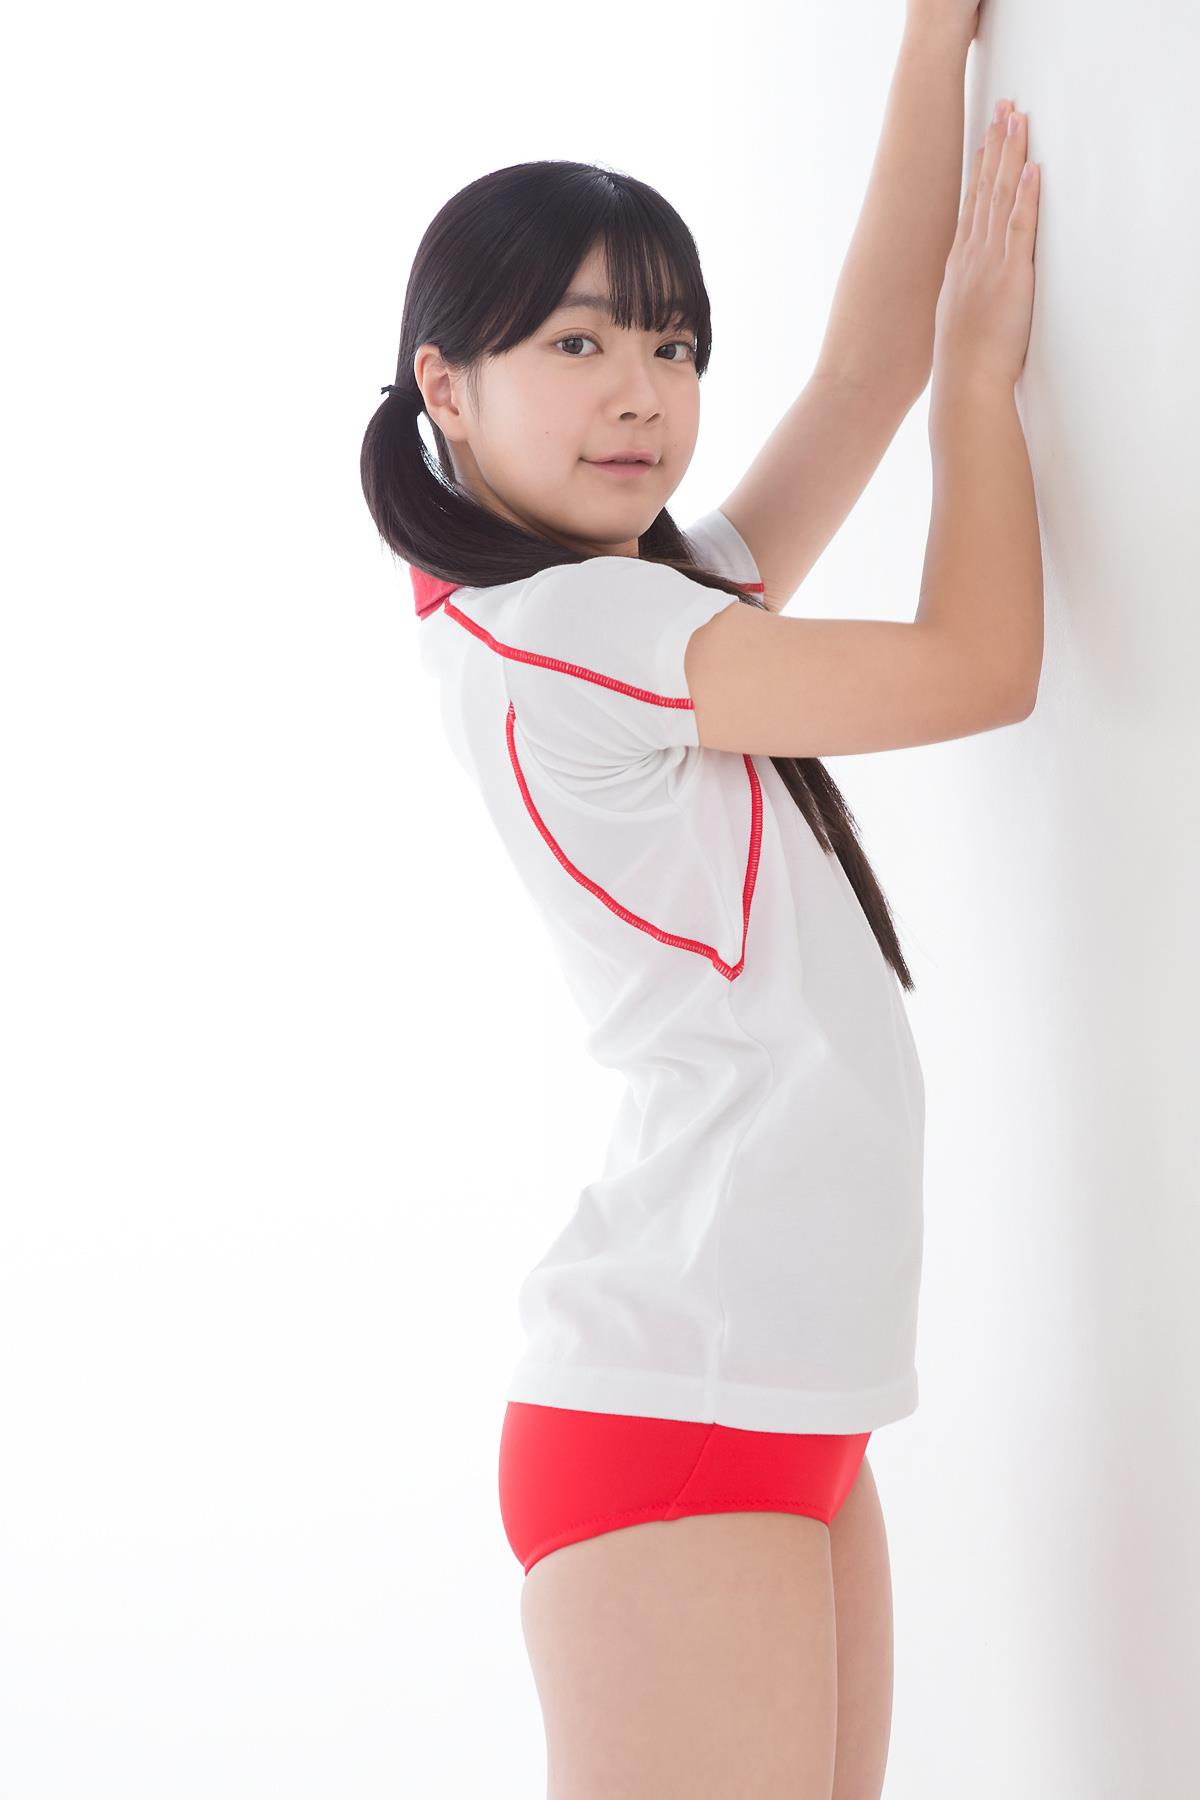 Minisuka.tv Saria Natsume 夏目咲莉愛 - Premium Gallery 2.1 - 11.jpg